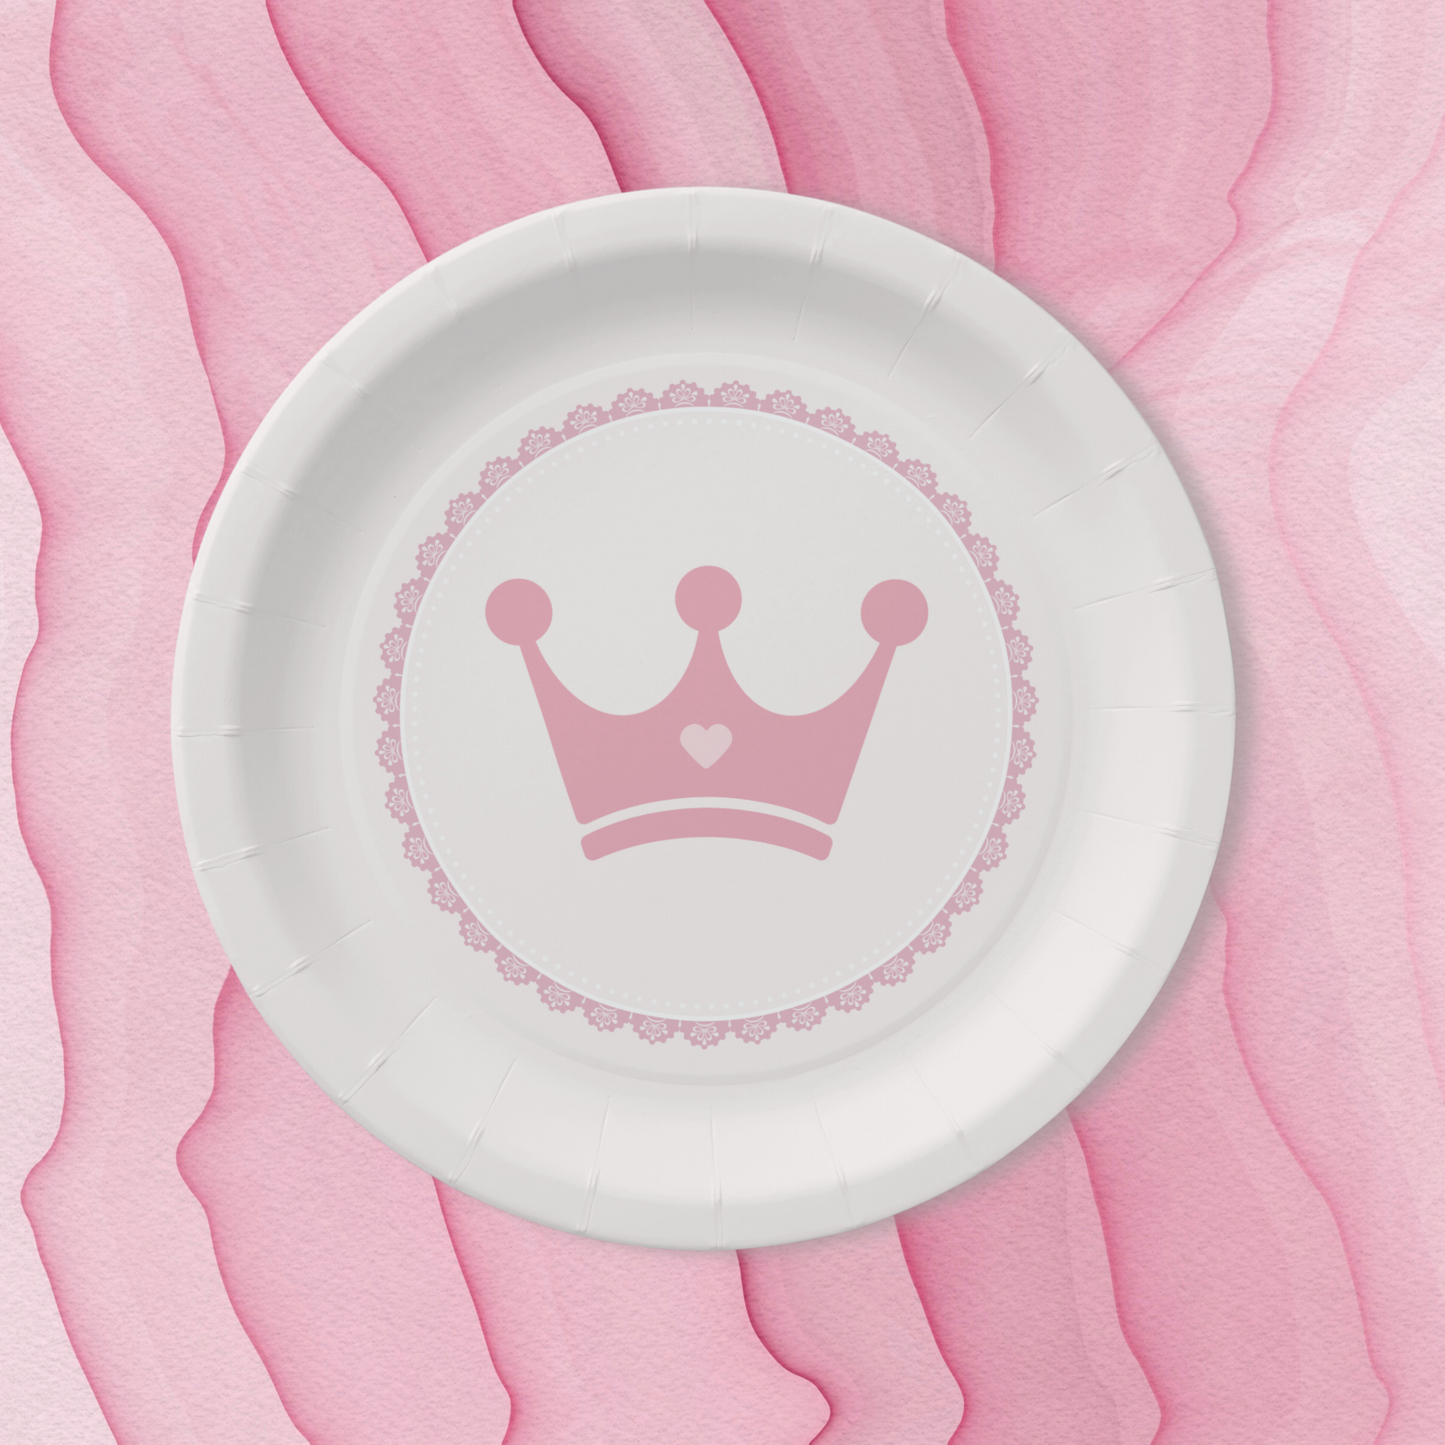 Pink Crown Princess Plate Design (DIGITAL DOWNLOAD)